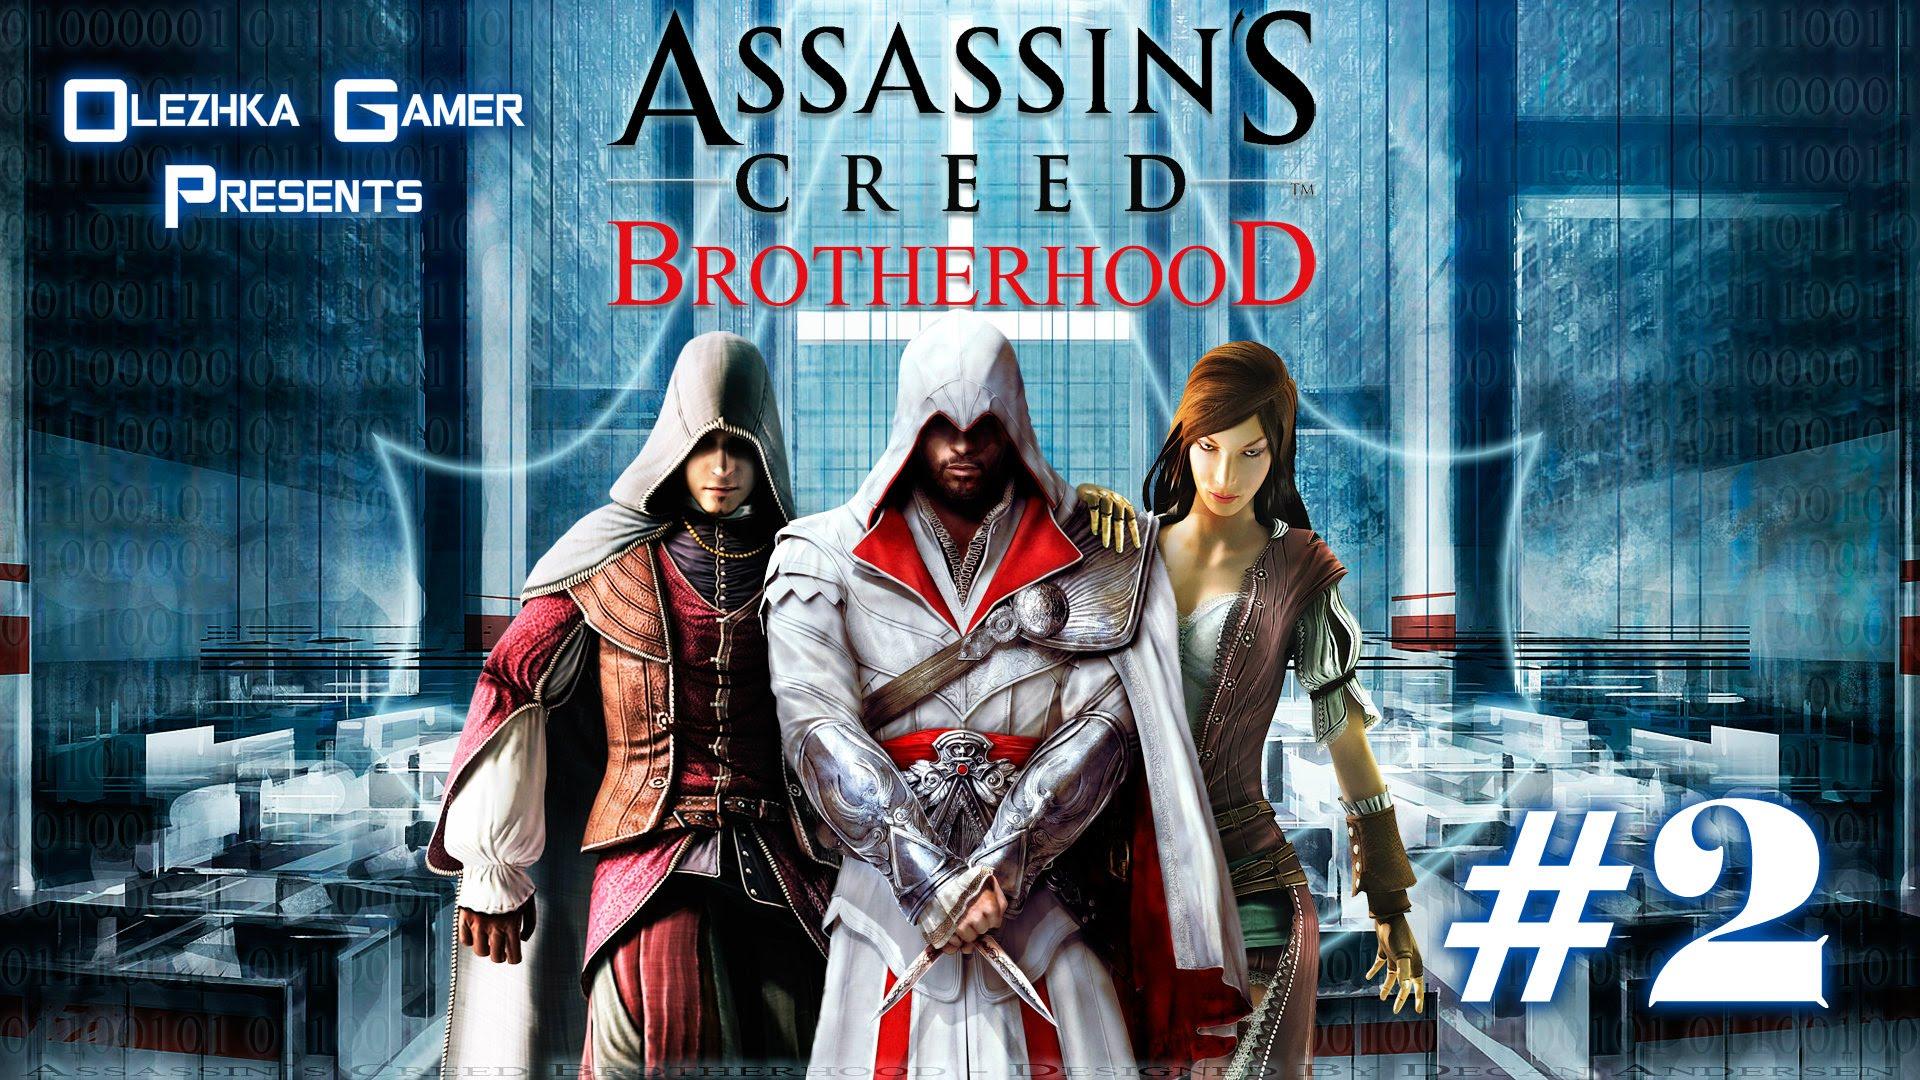 Assassins Creed Brotherhood HD Wallpaper free